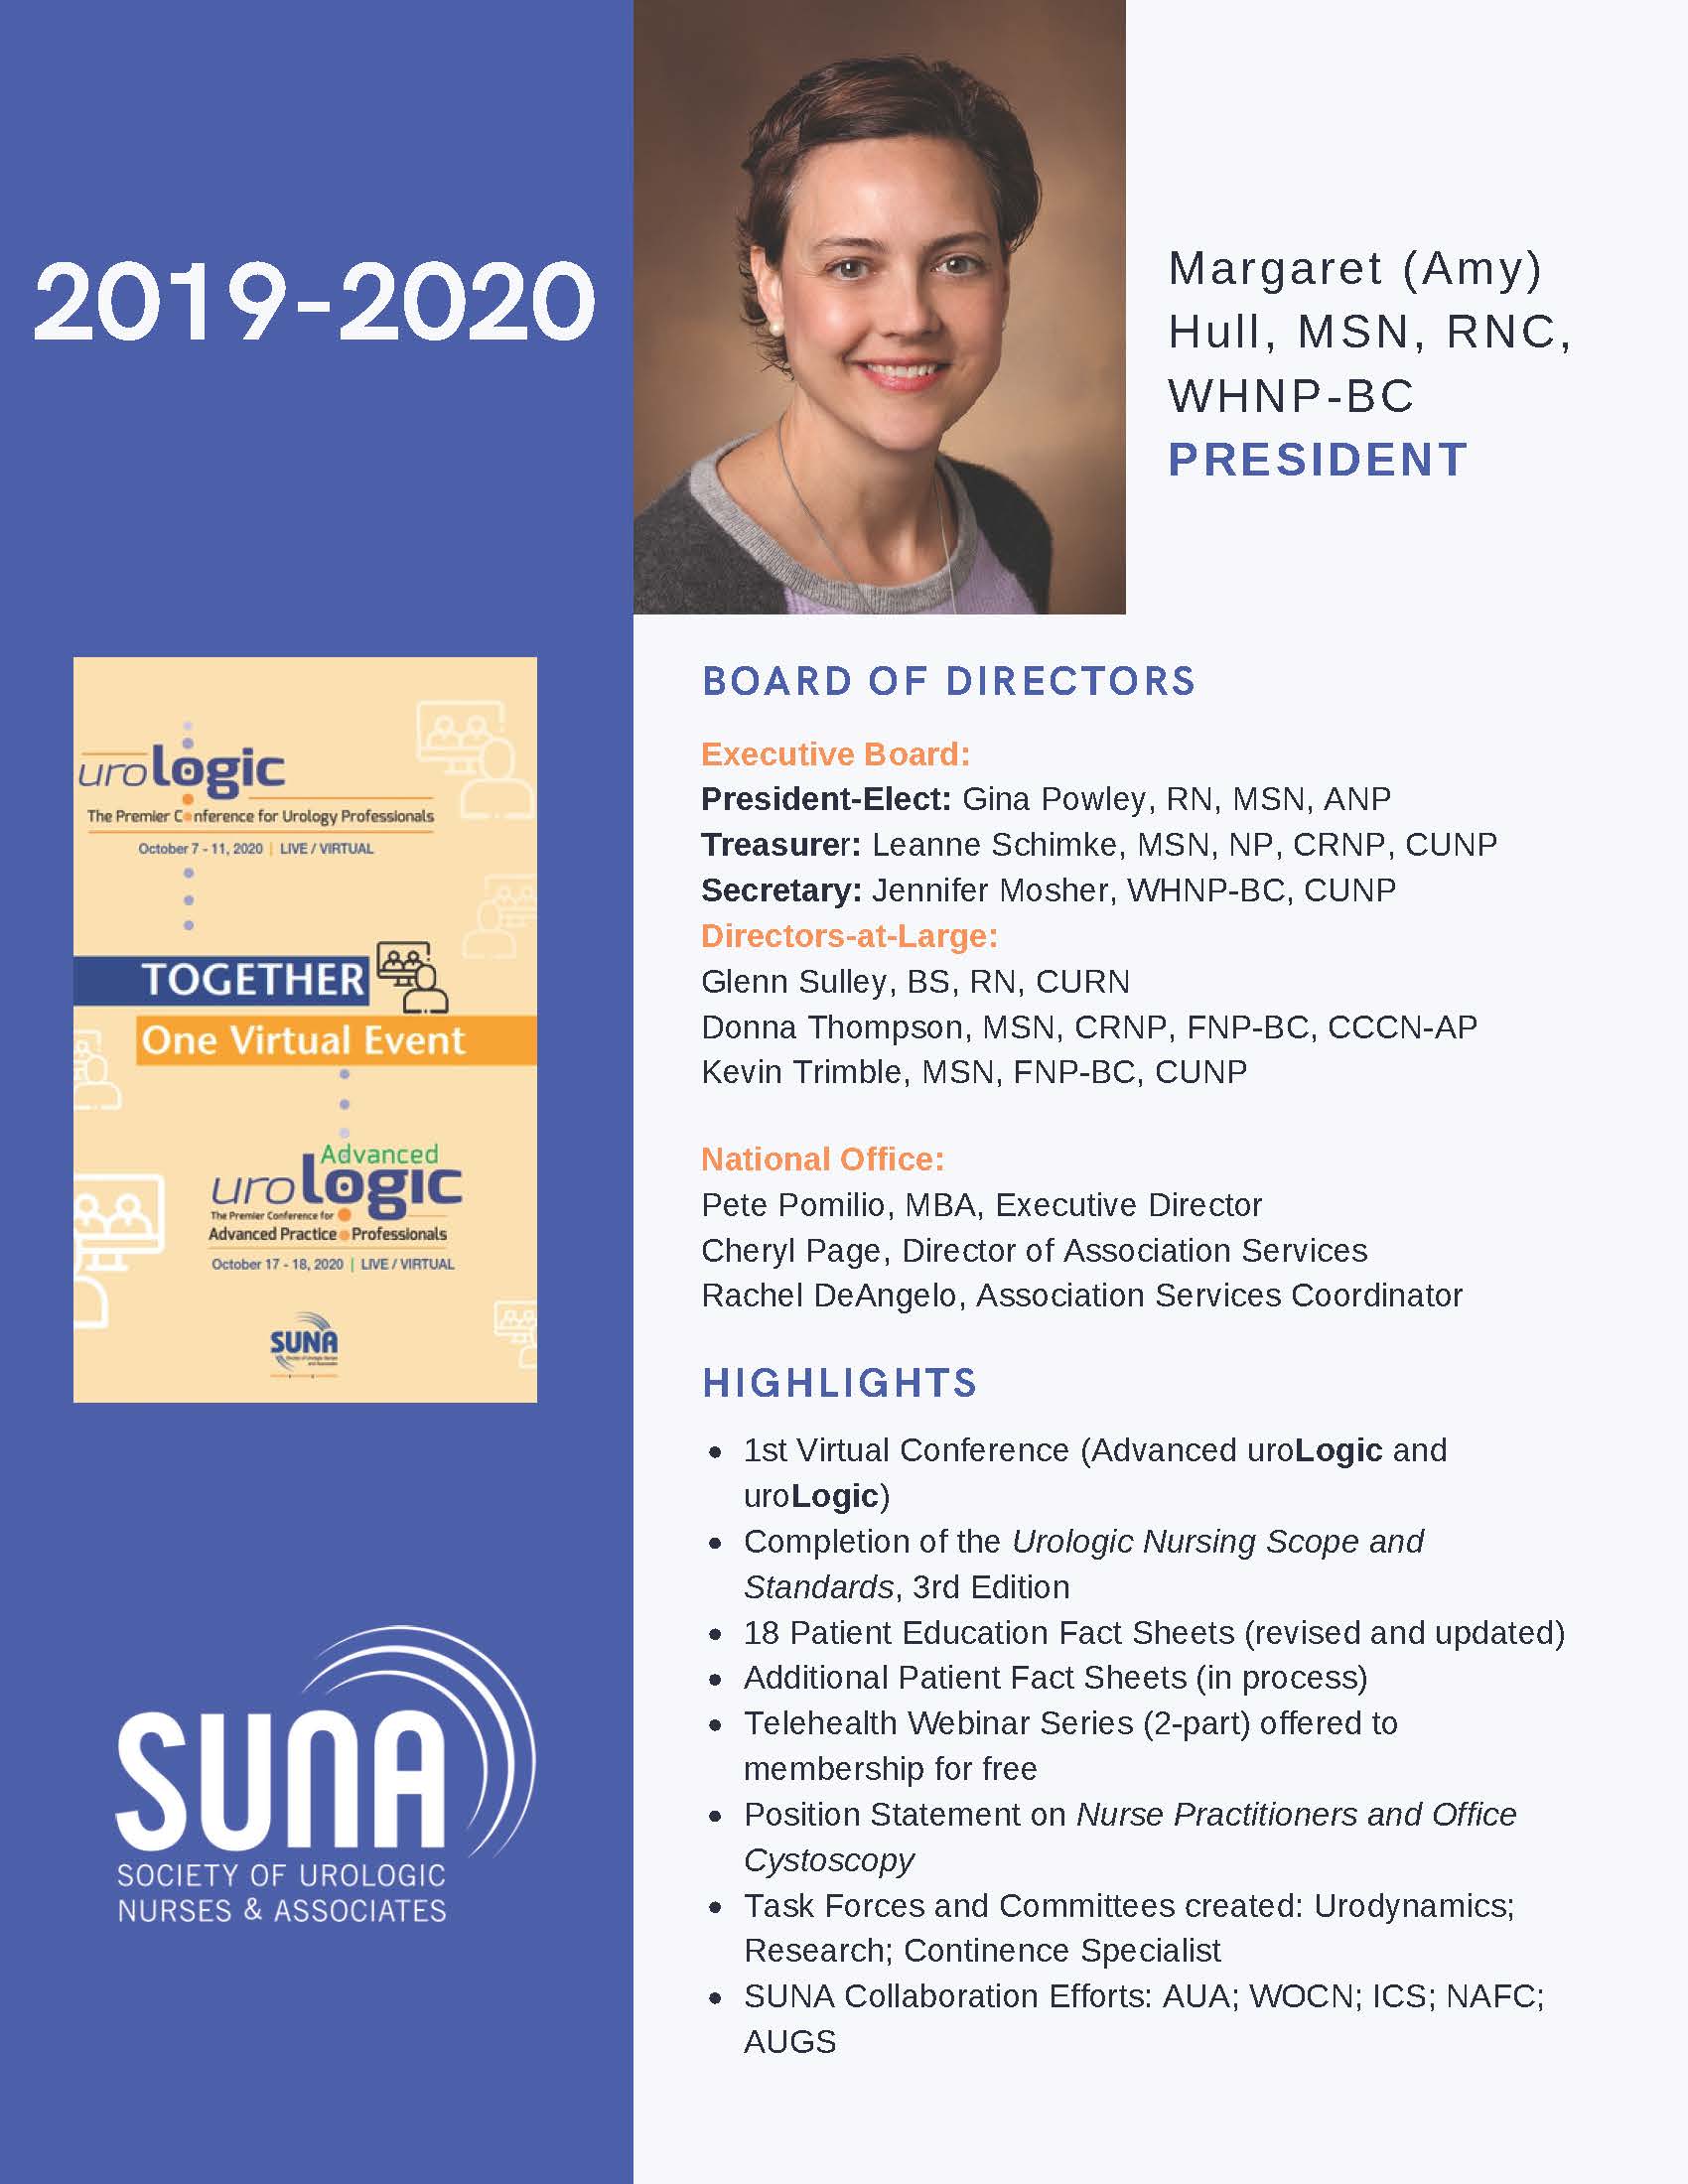 SUNA_President_Poster_2019-2020